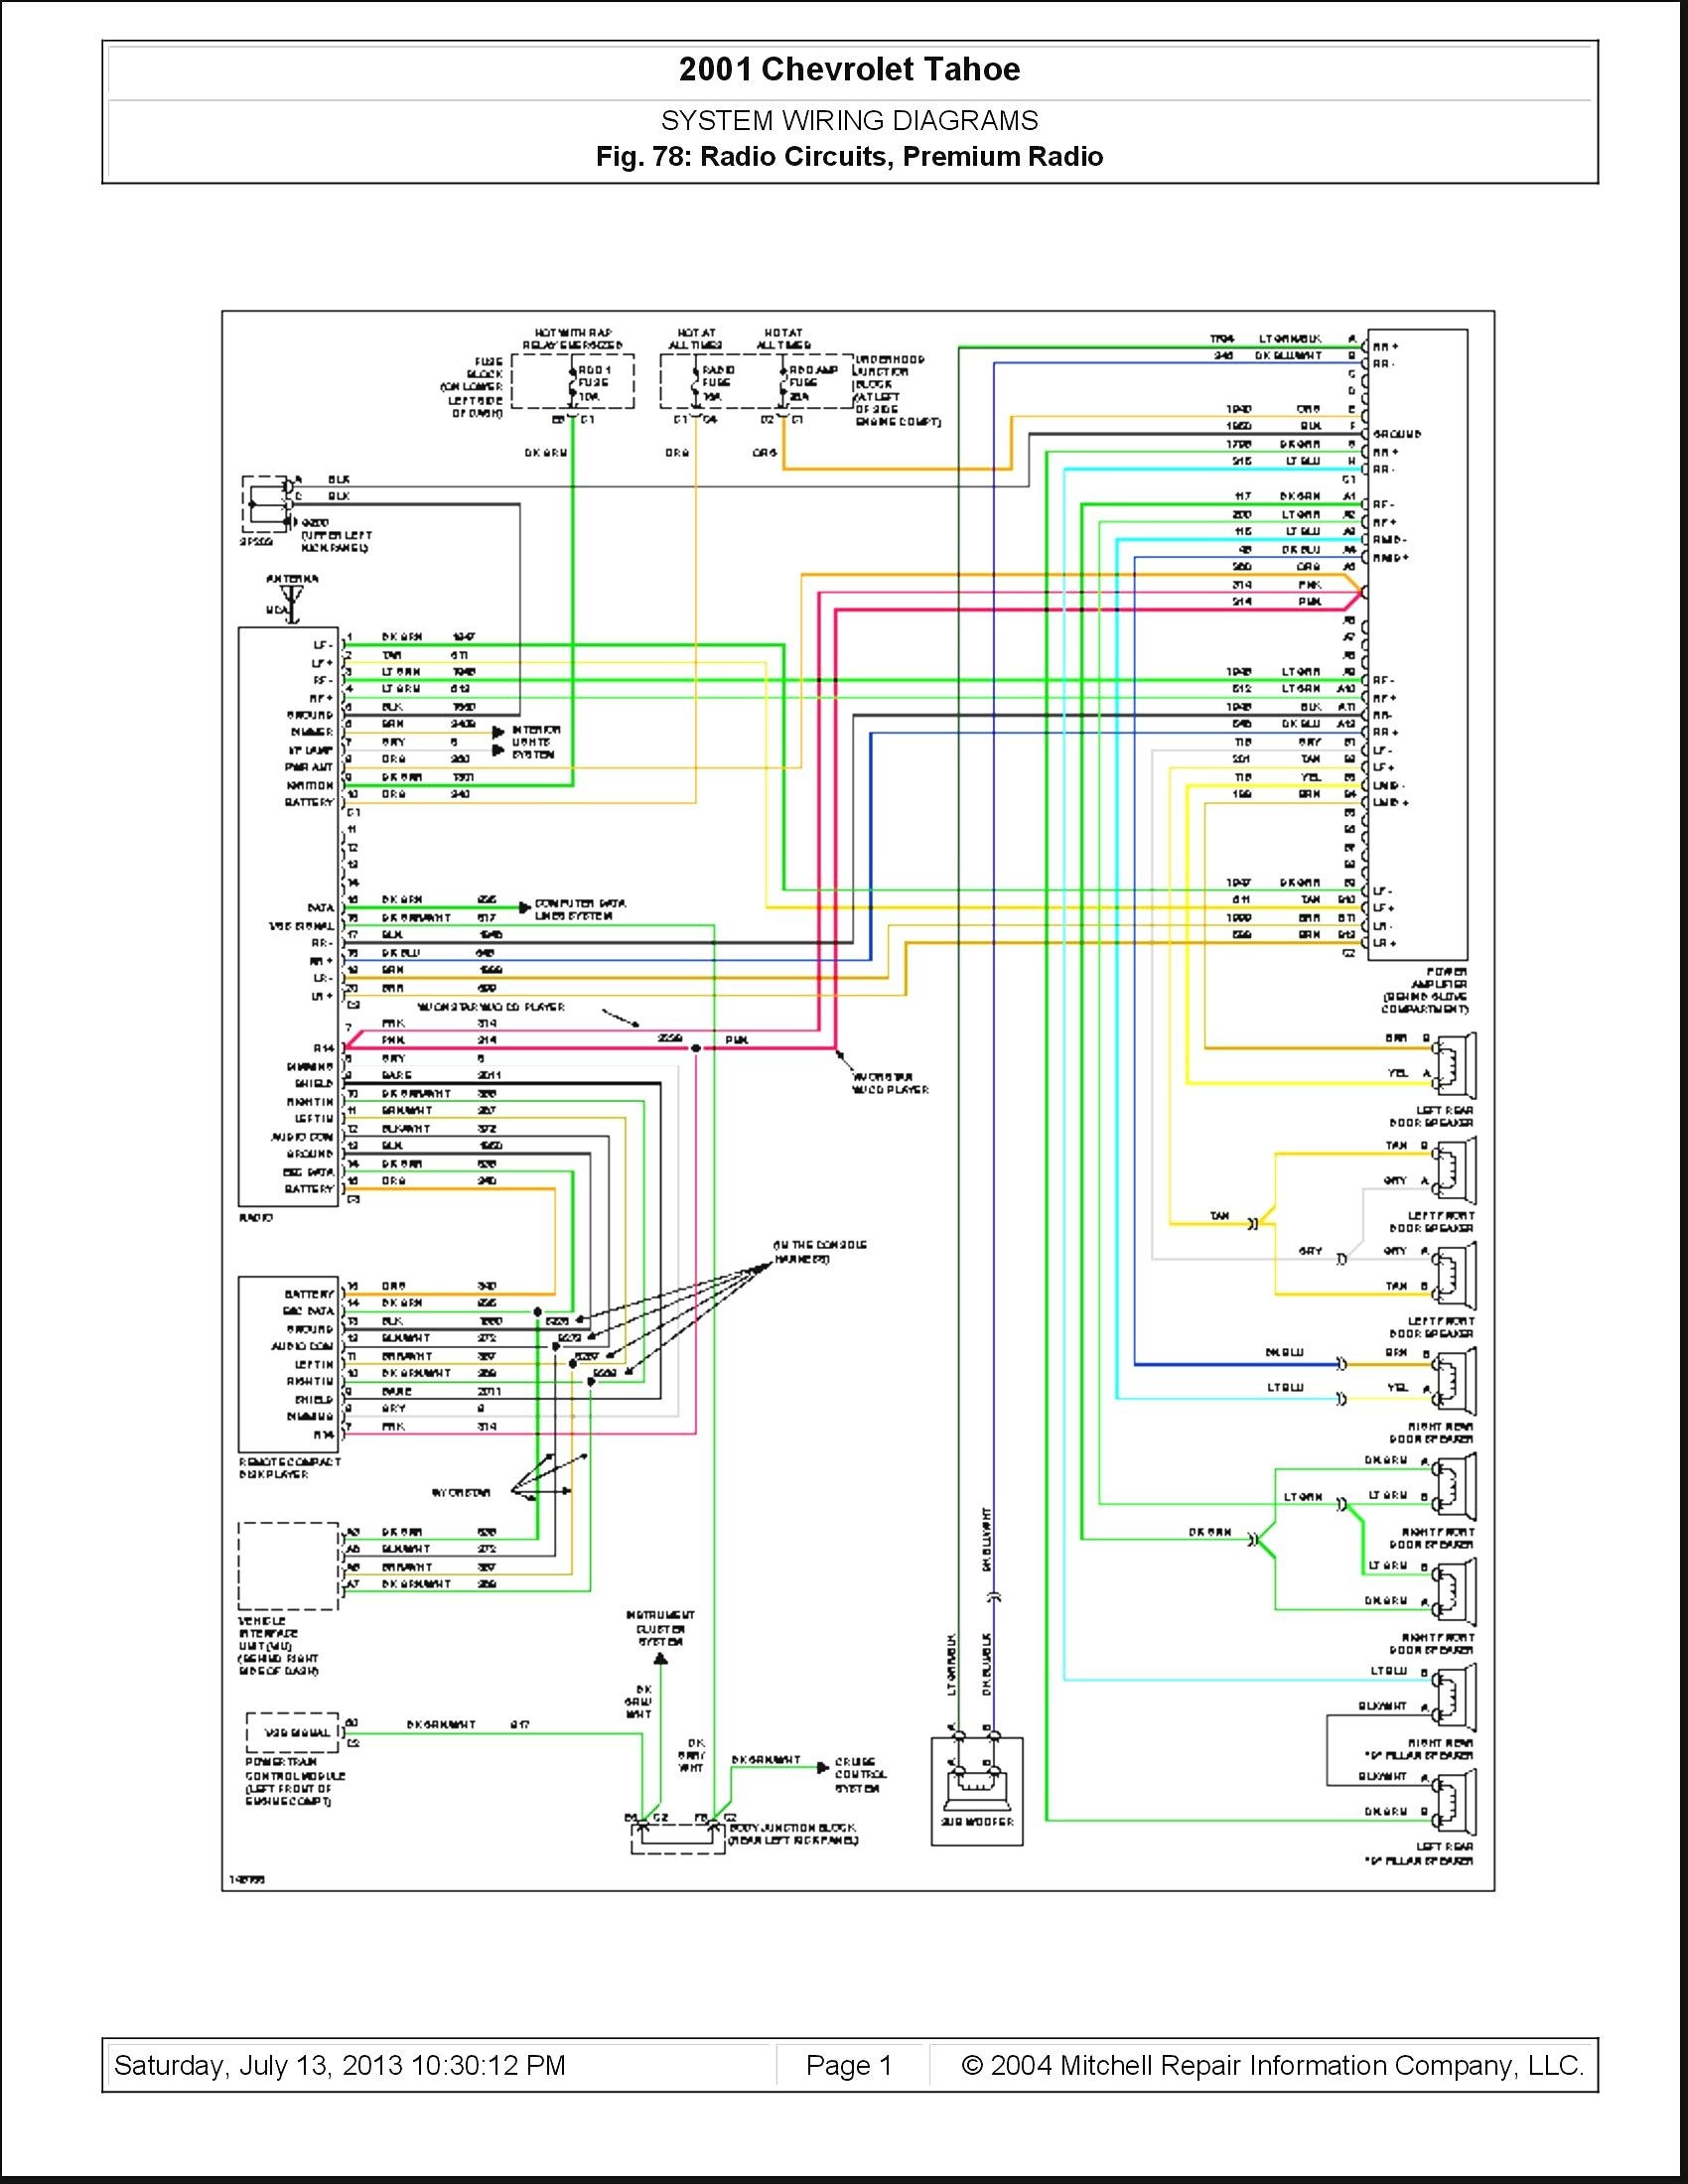 2004 Chevy Trailblazer Engine Diagram Chevy Trailblazer Trailer Wiring Diagram Wiring Diagram Meta Of 2004 Chevy Trailblazer Engine Diagram